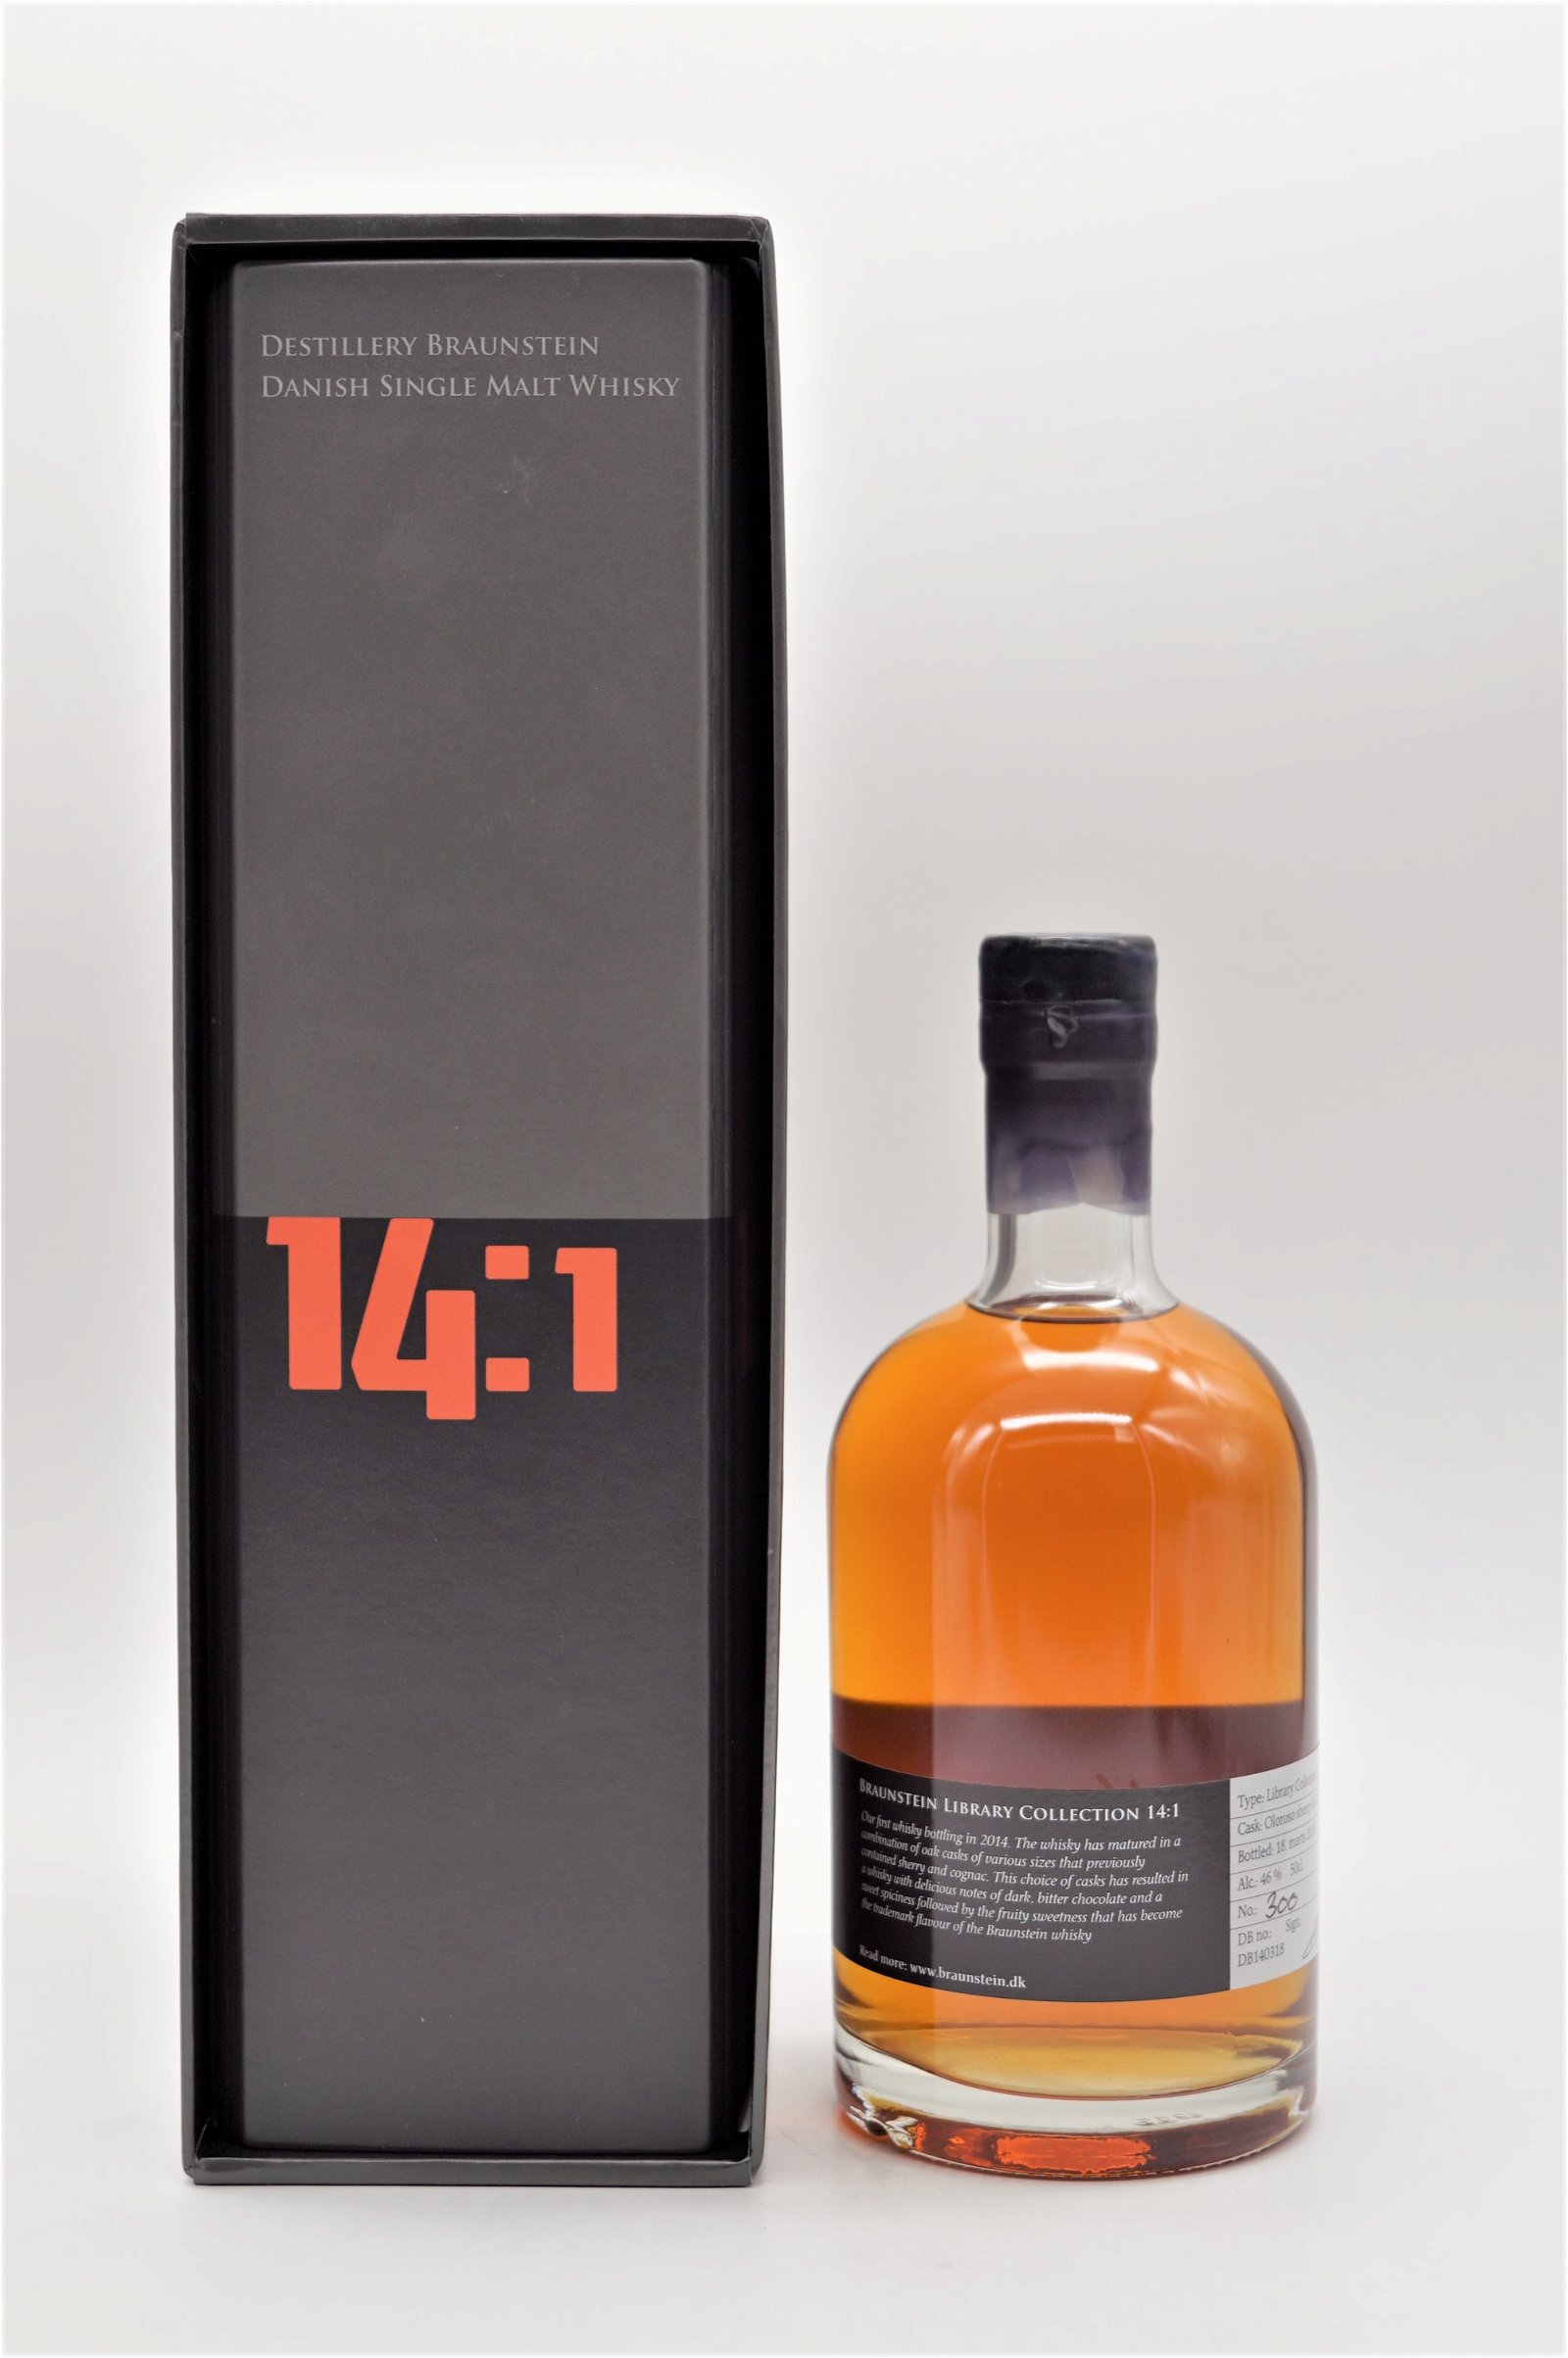 Braunstein Libary Collection 14:1 Dansk Single Malt Whisky